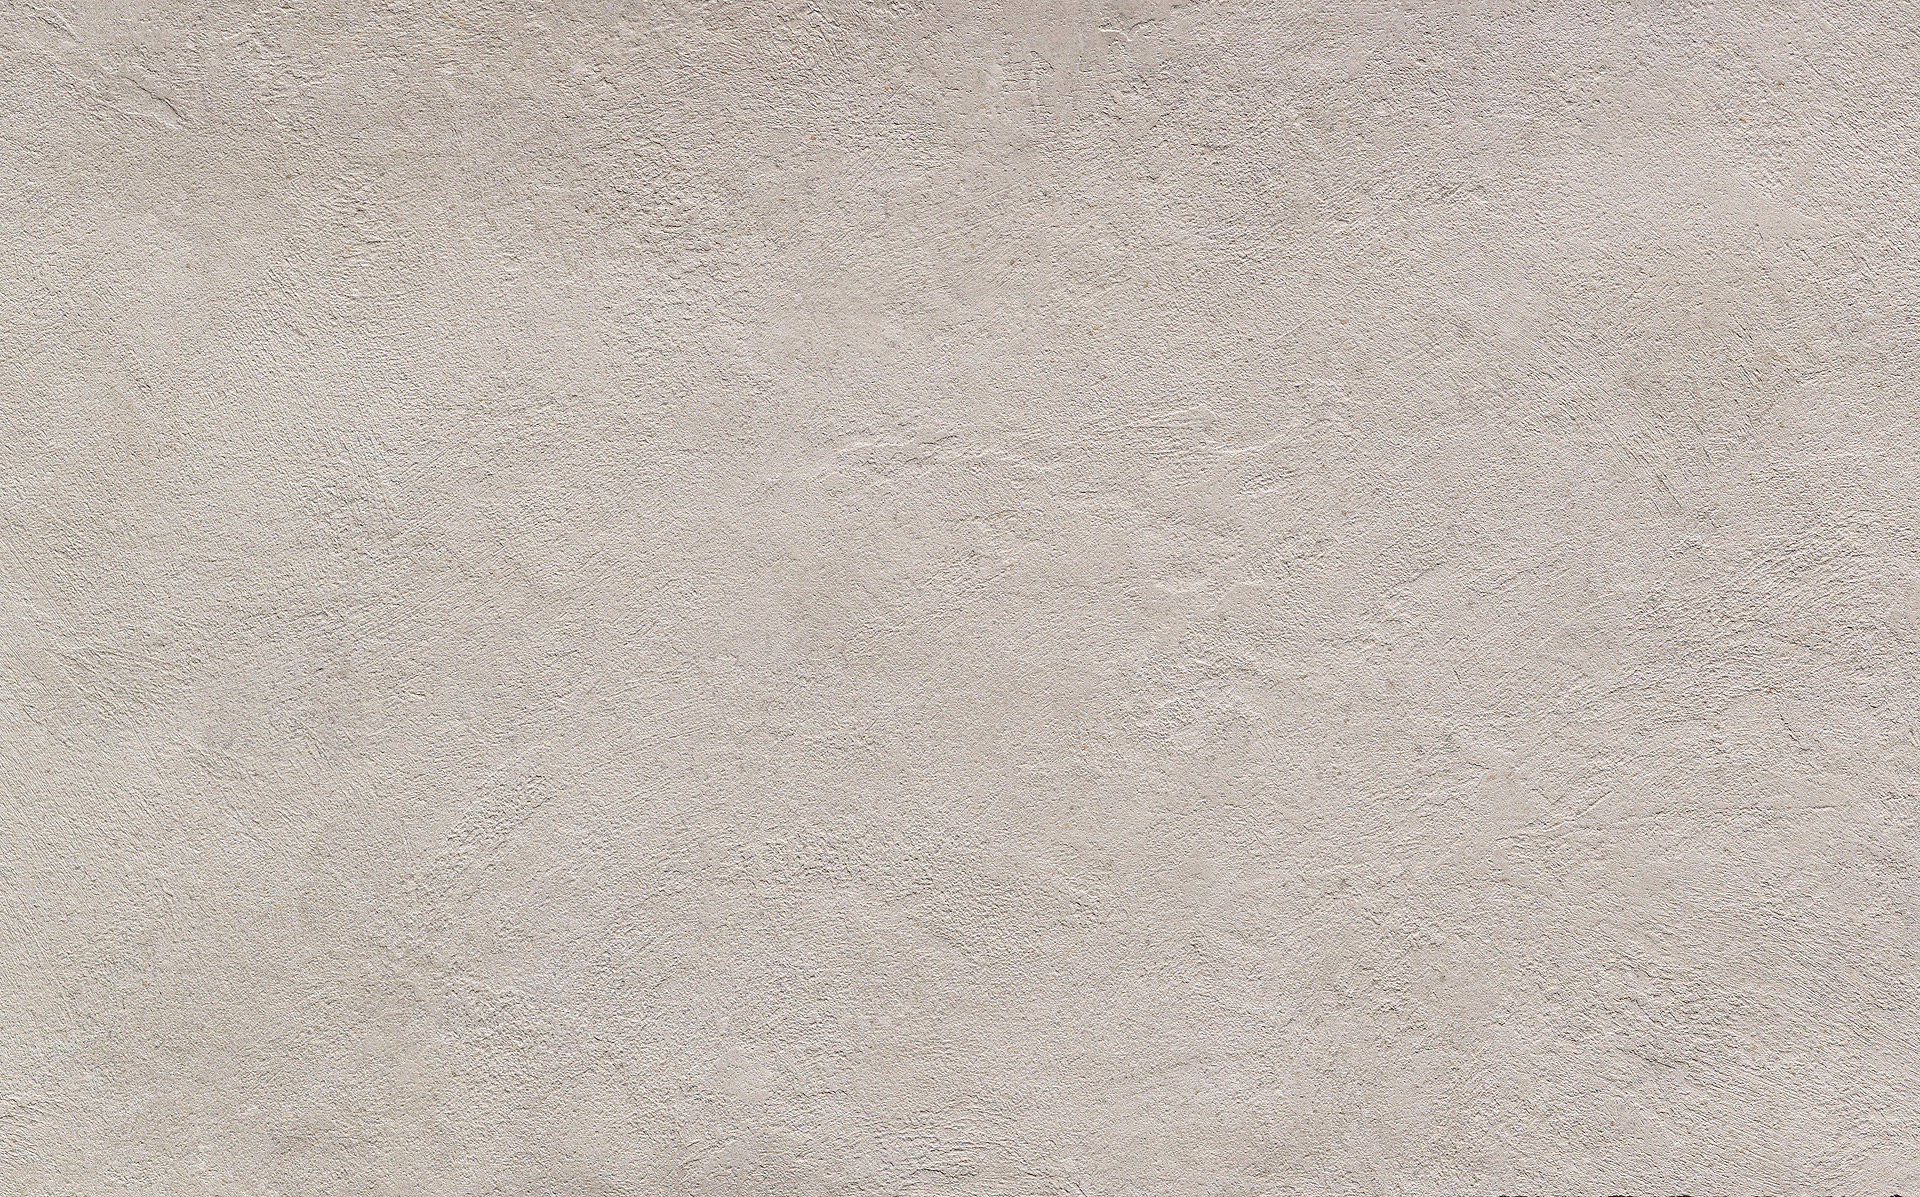 IMCOP WHITE NATURAL Natural Grey Stone tile   60 x 120 cm